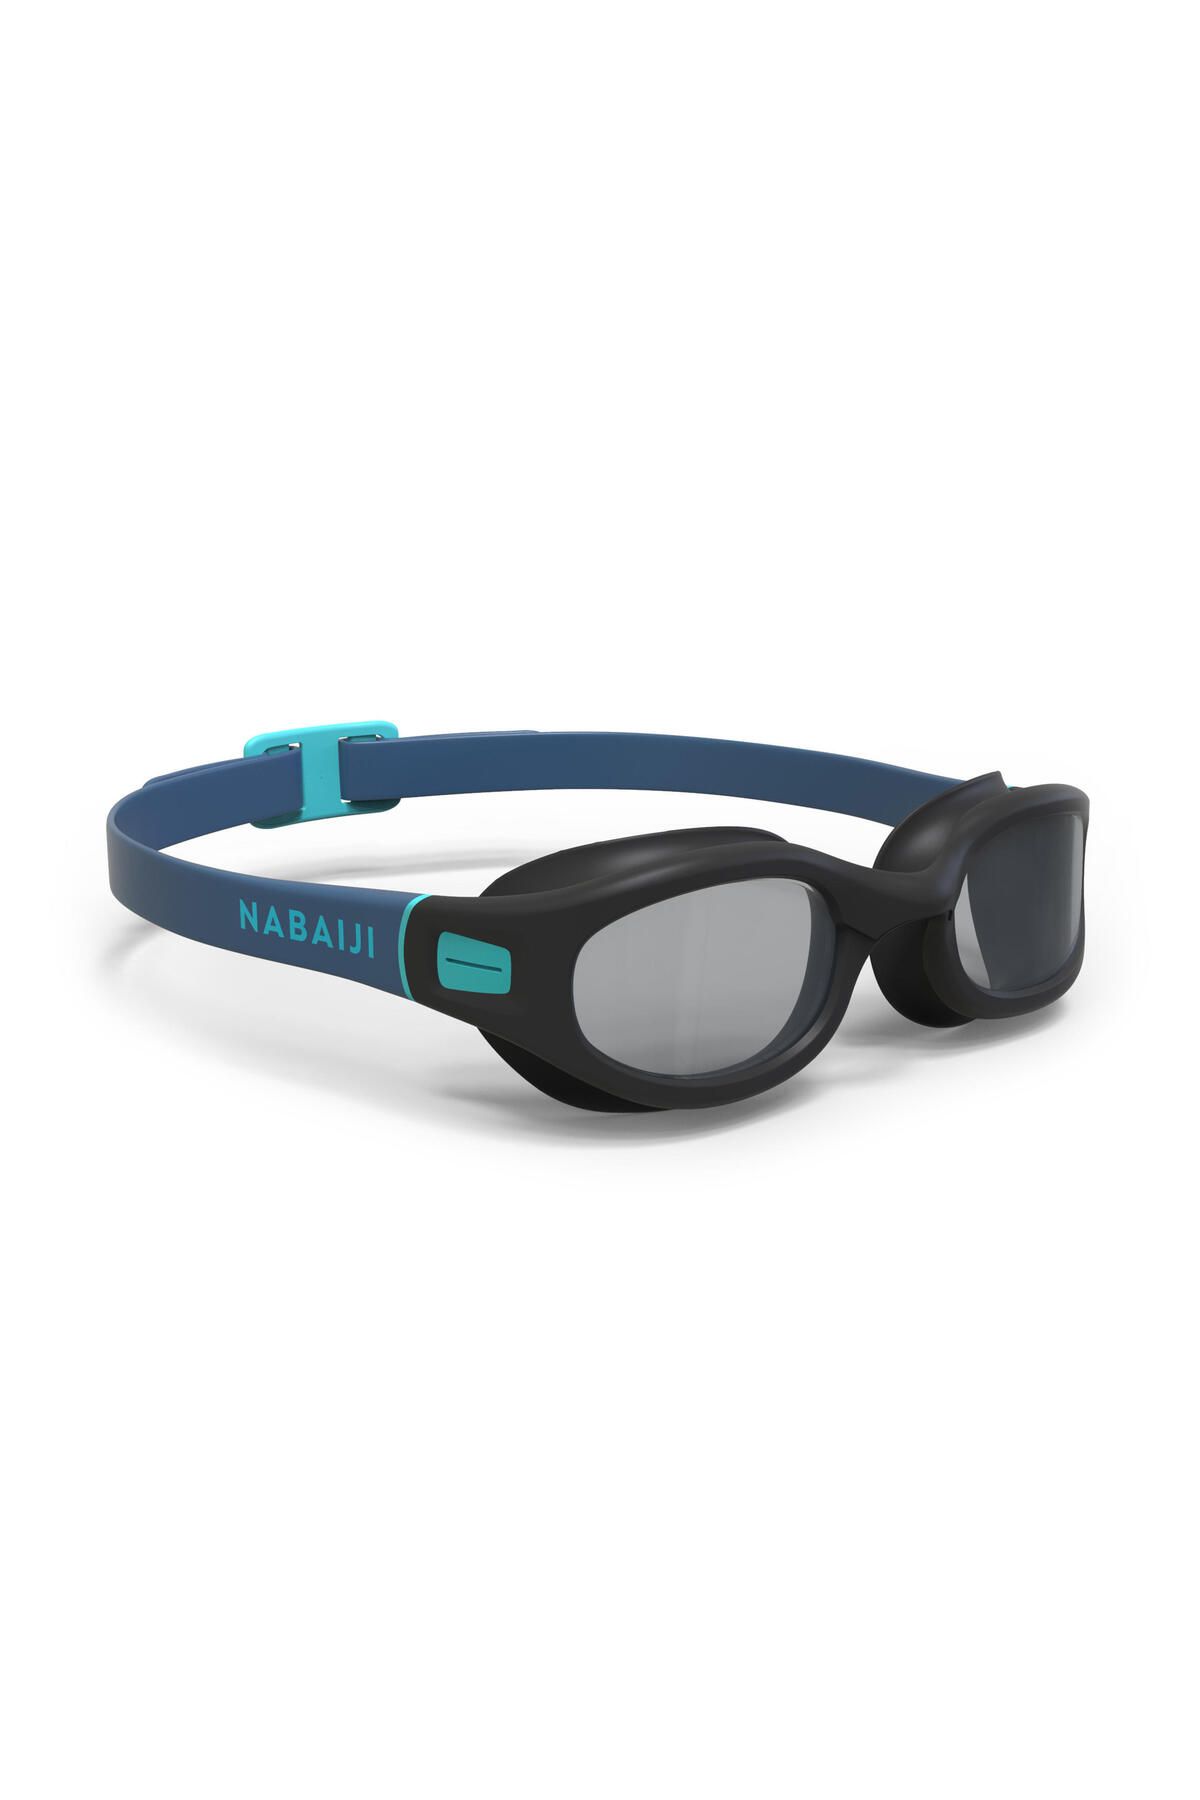 Decathlon NABAIJI Yüzücü Gözlüğü - Büyük Boy - Siyah/Mavi - Şeffaf Camlar - Soft